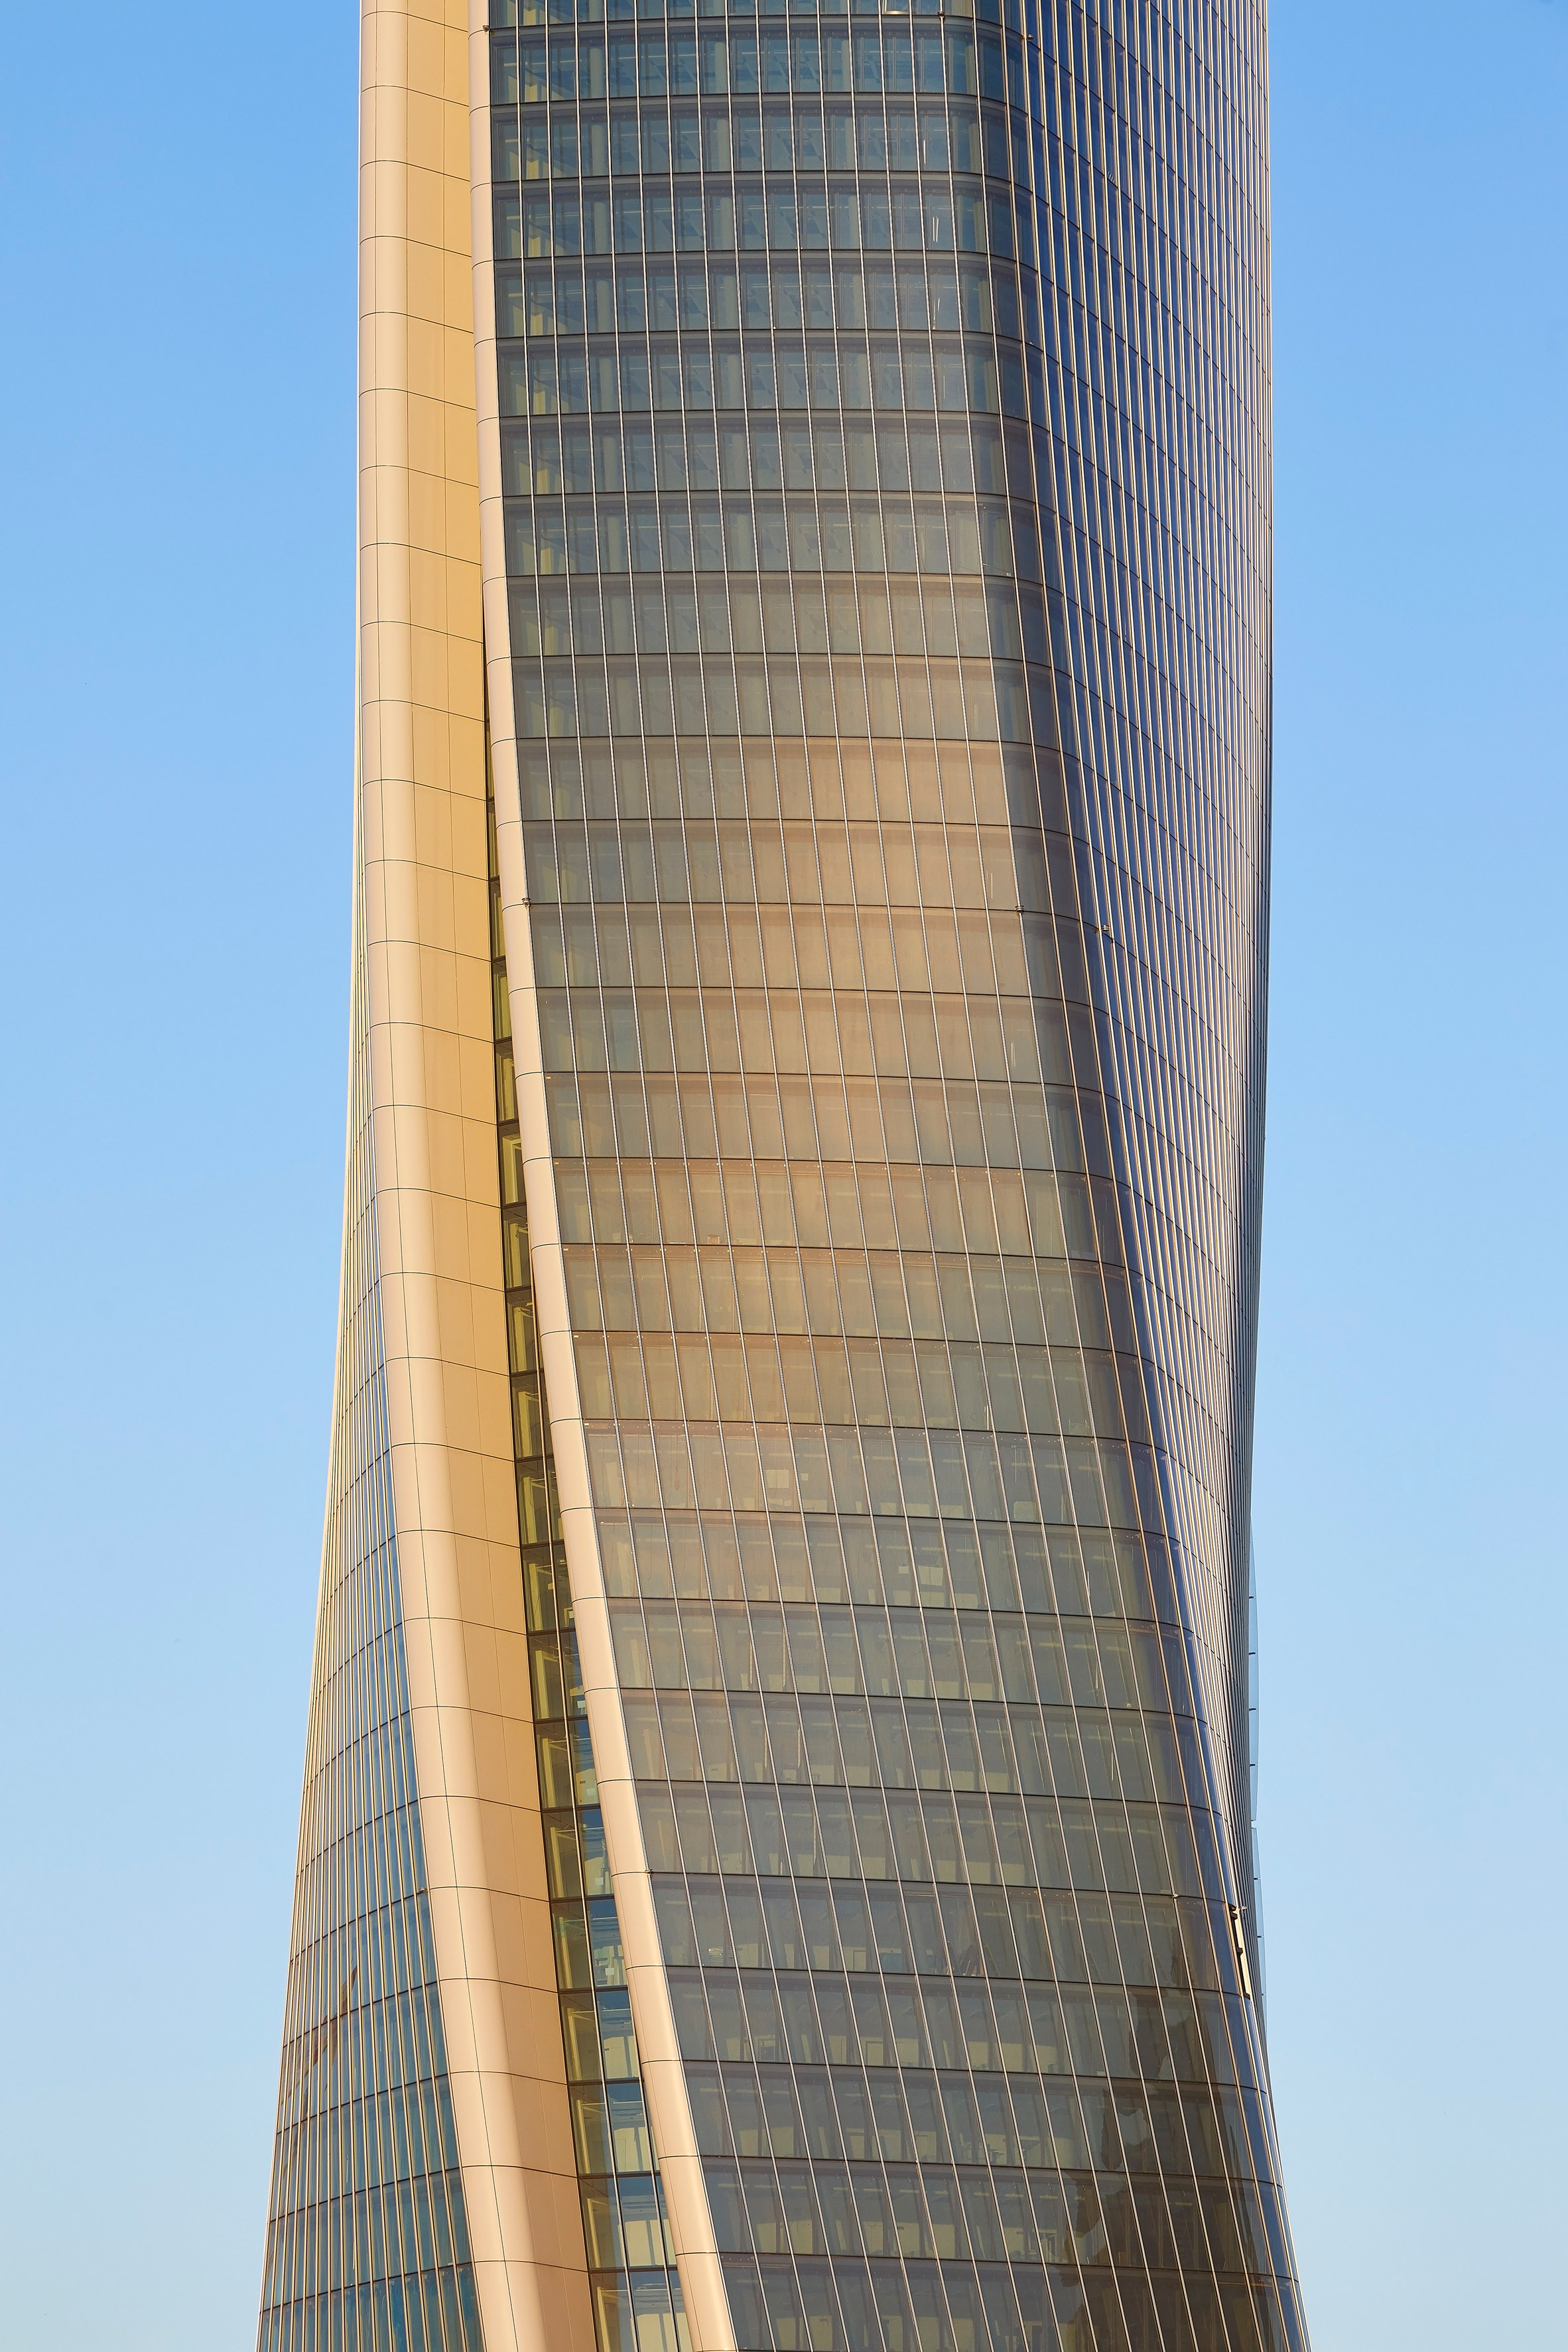 Generali Tower by ZHA